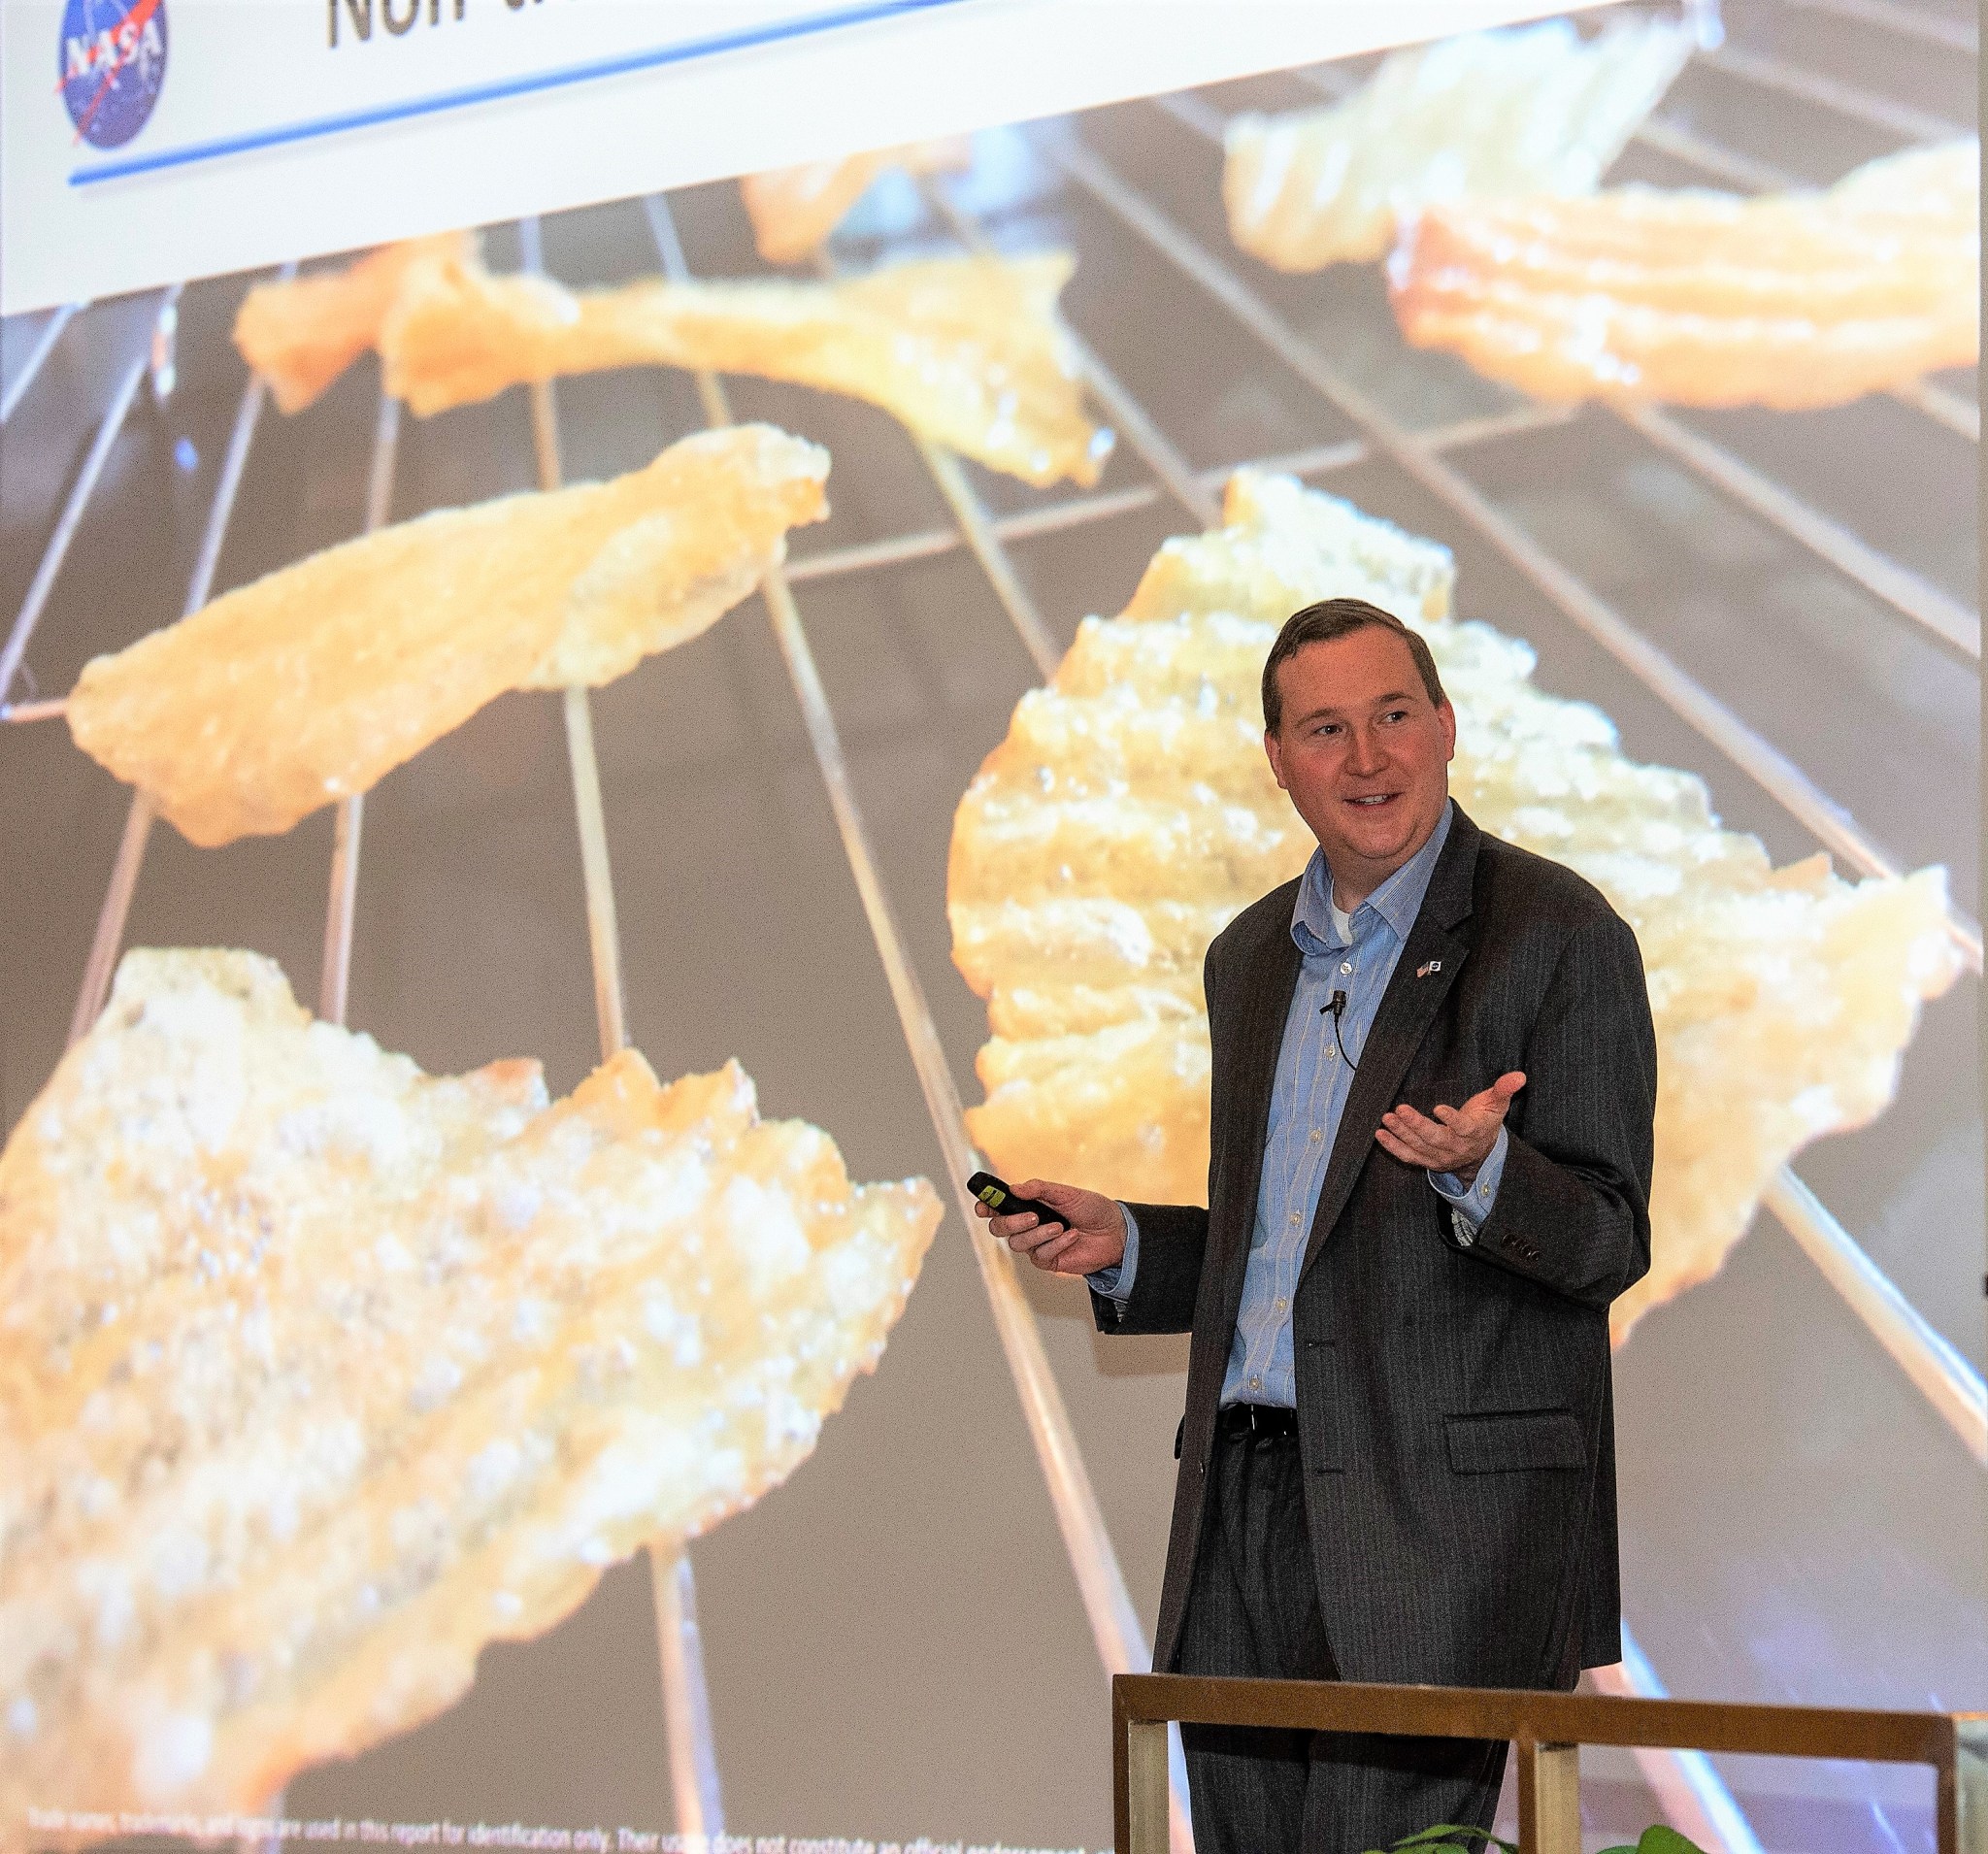 John Dankanich, Marshall’s center chief technologist, also gave a presentation about NASA innovation.